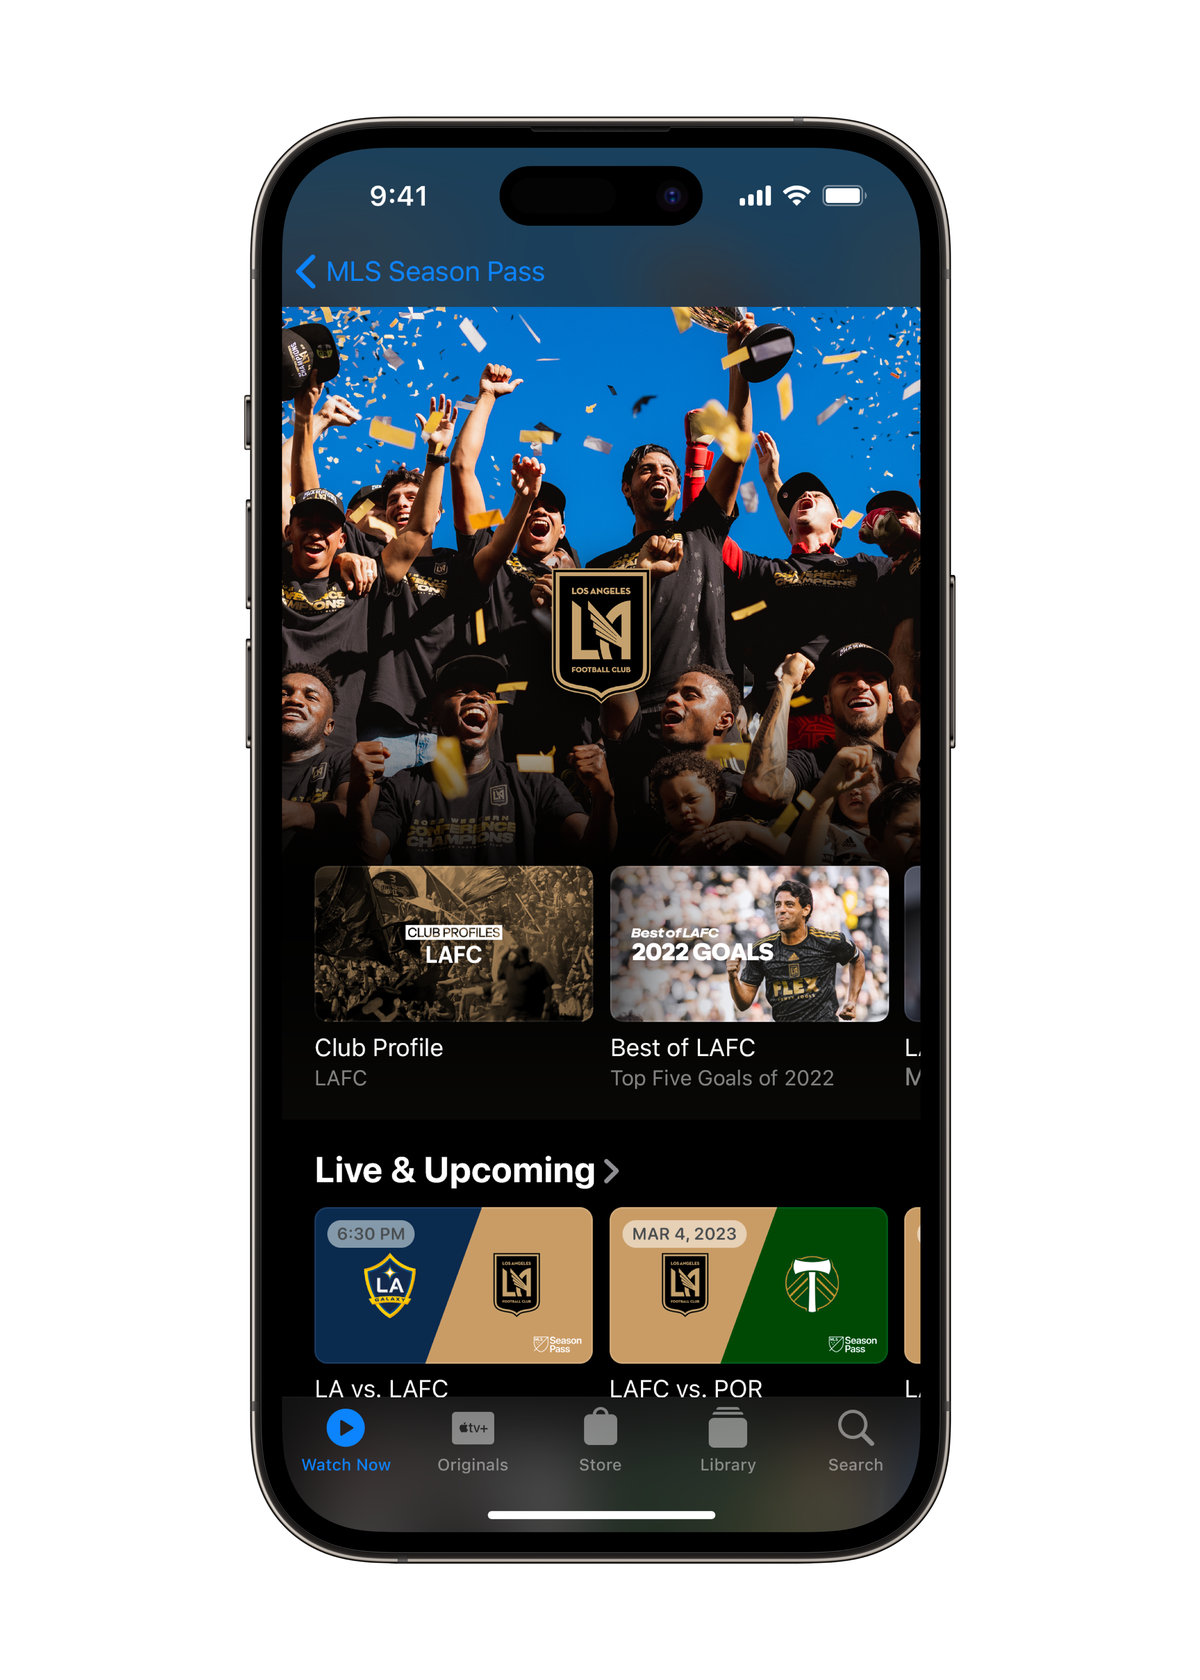 MLS Season Pass application displayed on an iPhone